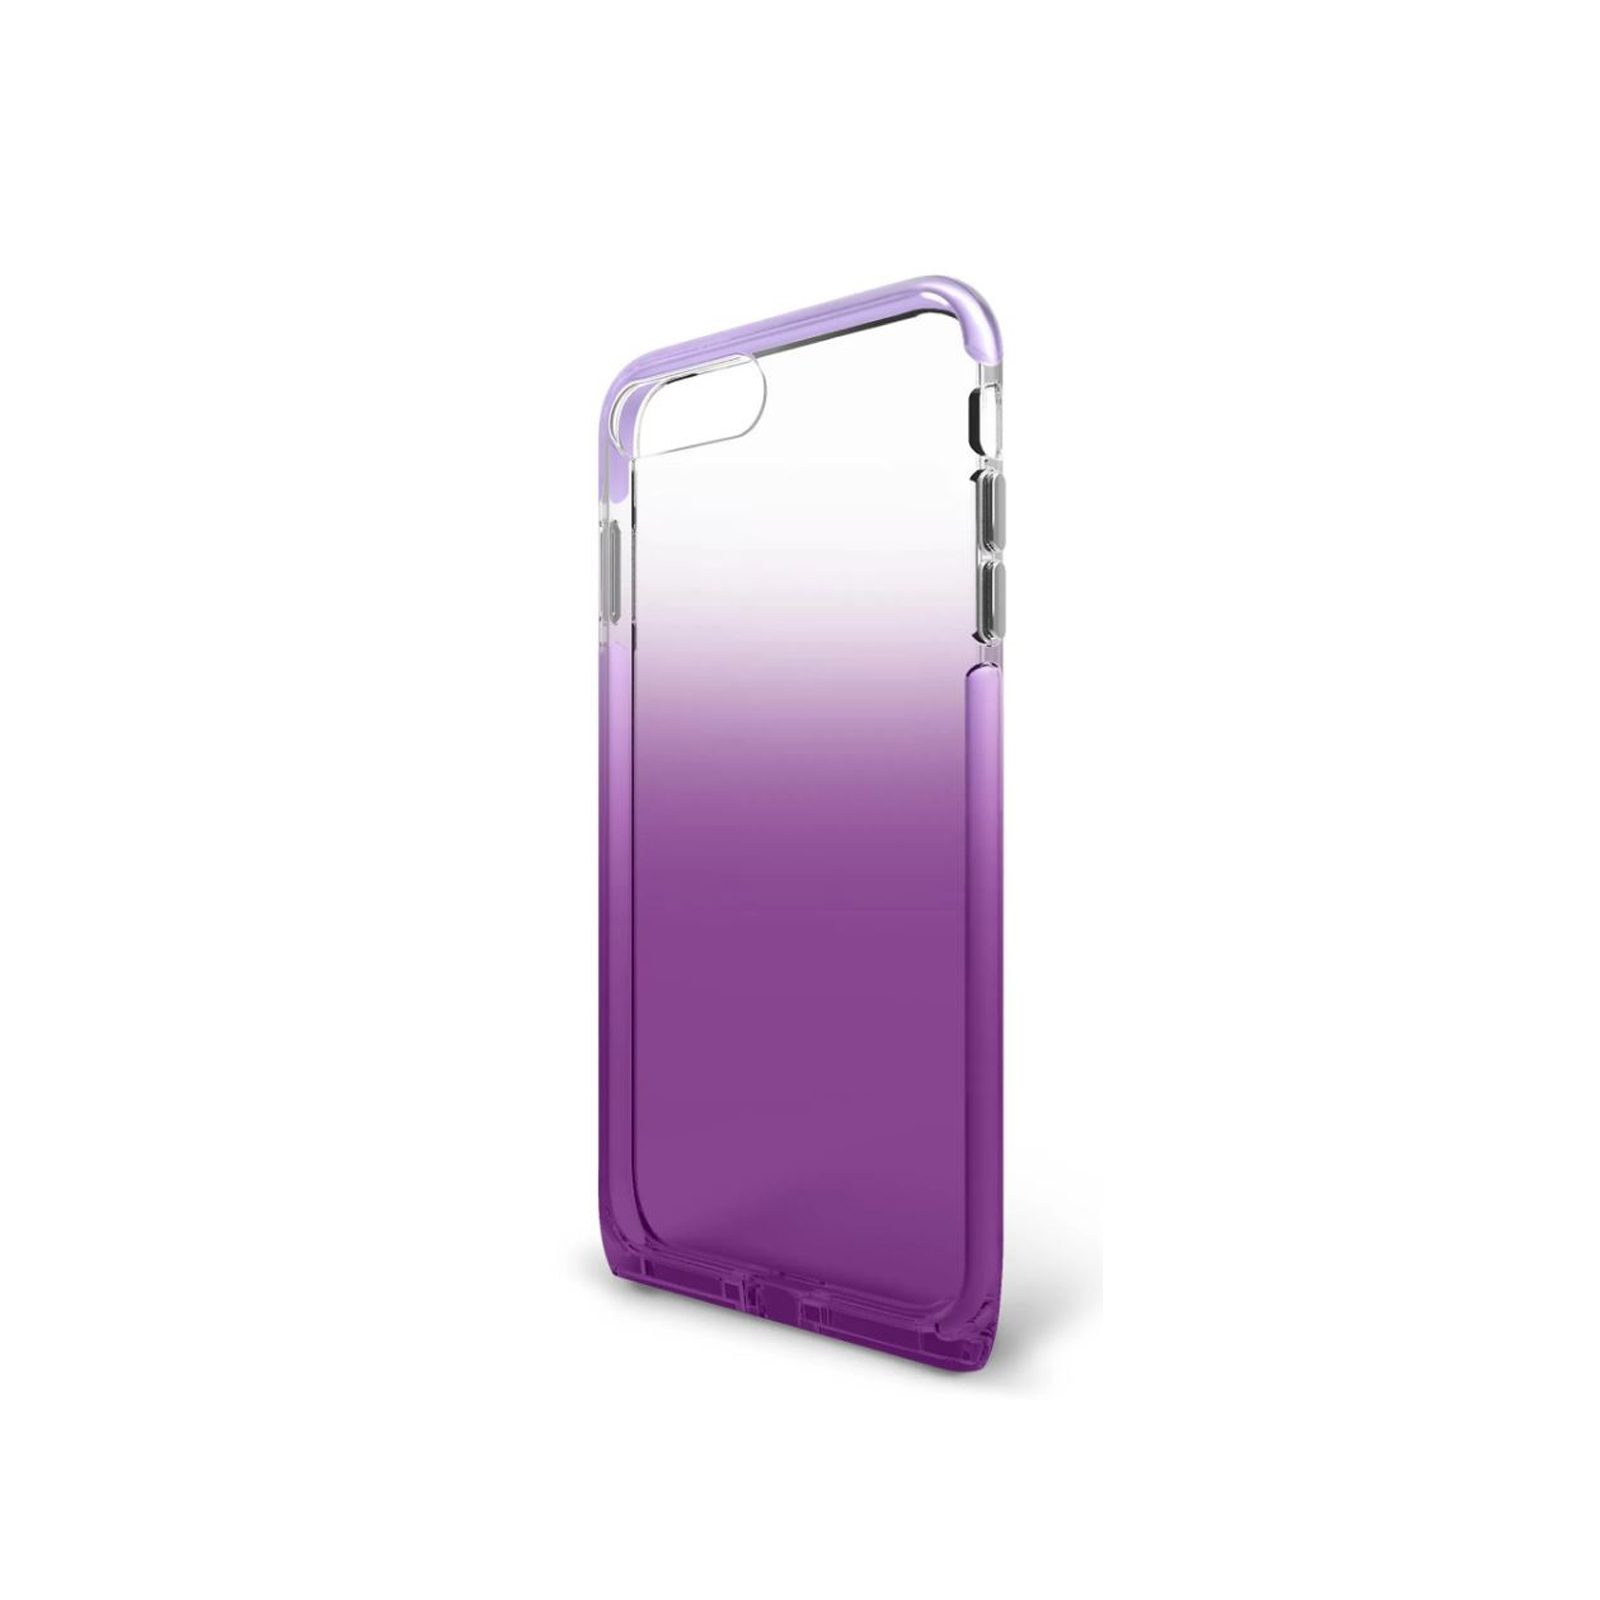 Harmony iPhone 6 Plus / 7 Plus / 8 Plus Case [Clear / Purple]